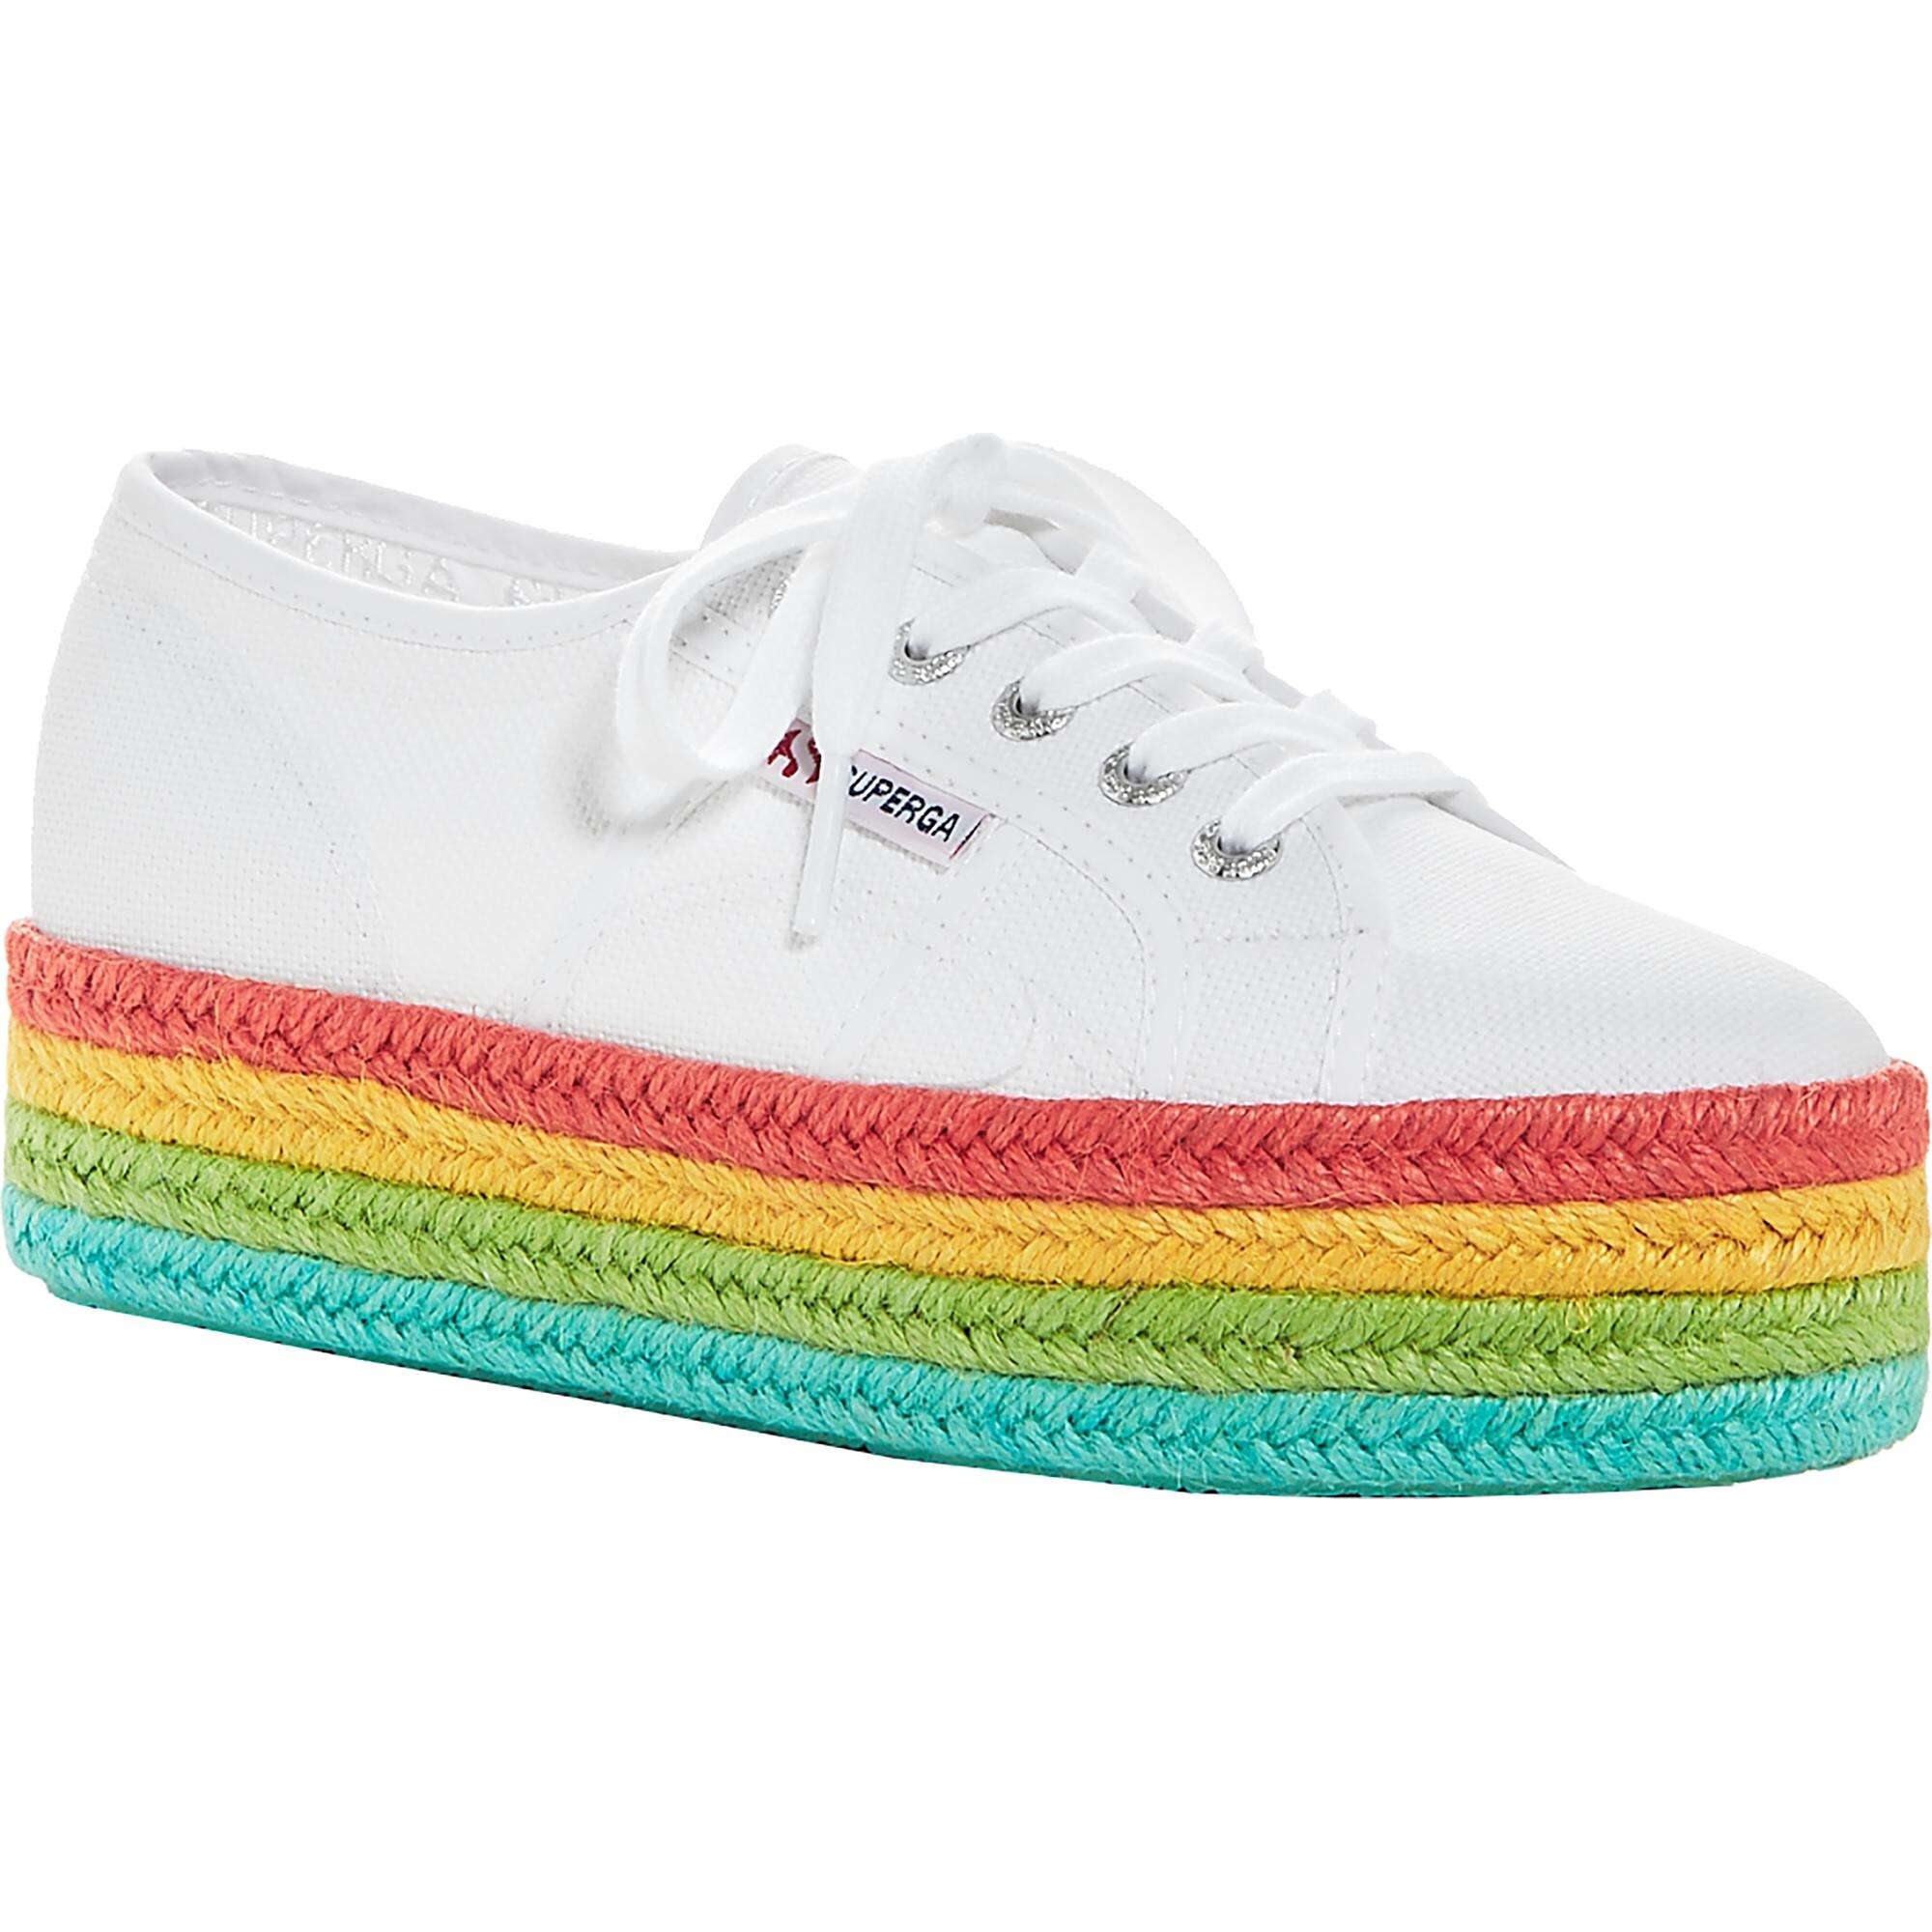 superga platform rainbow sneakers